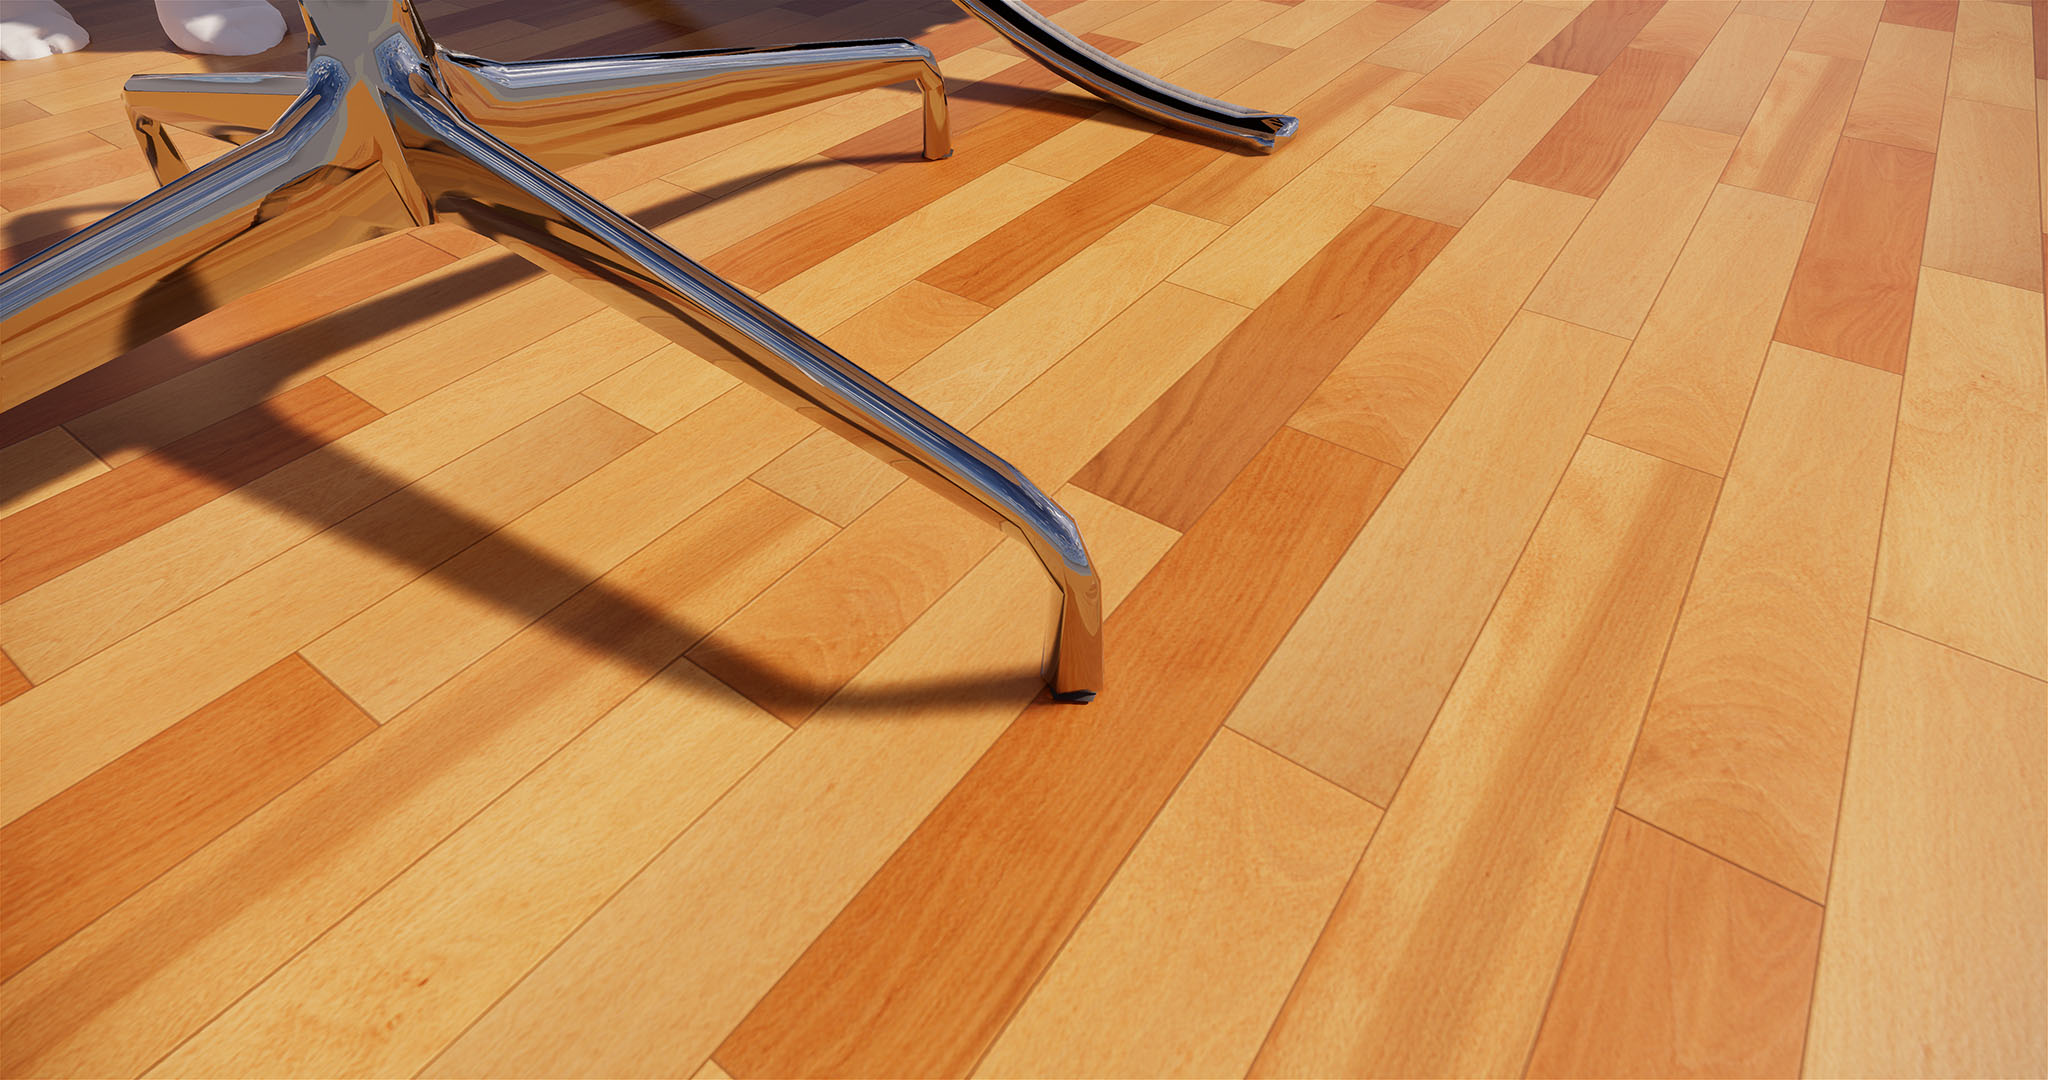 Wood flooring material – default settings